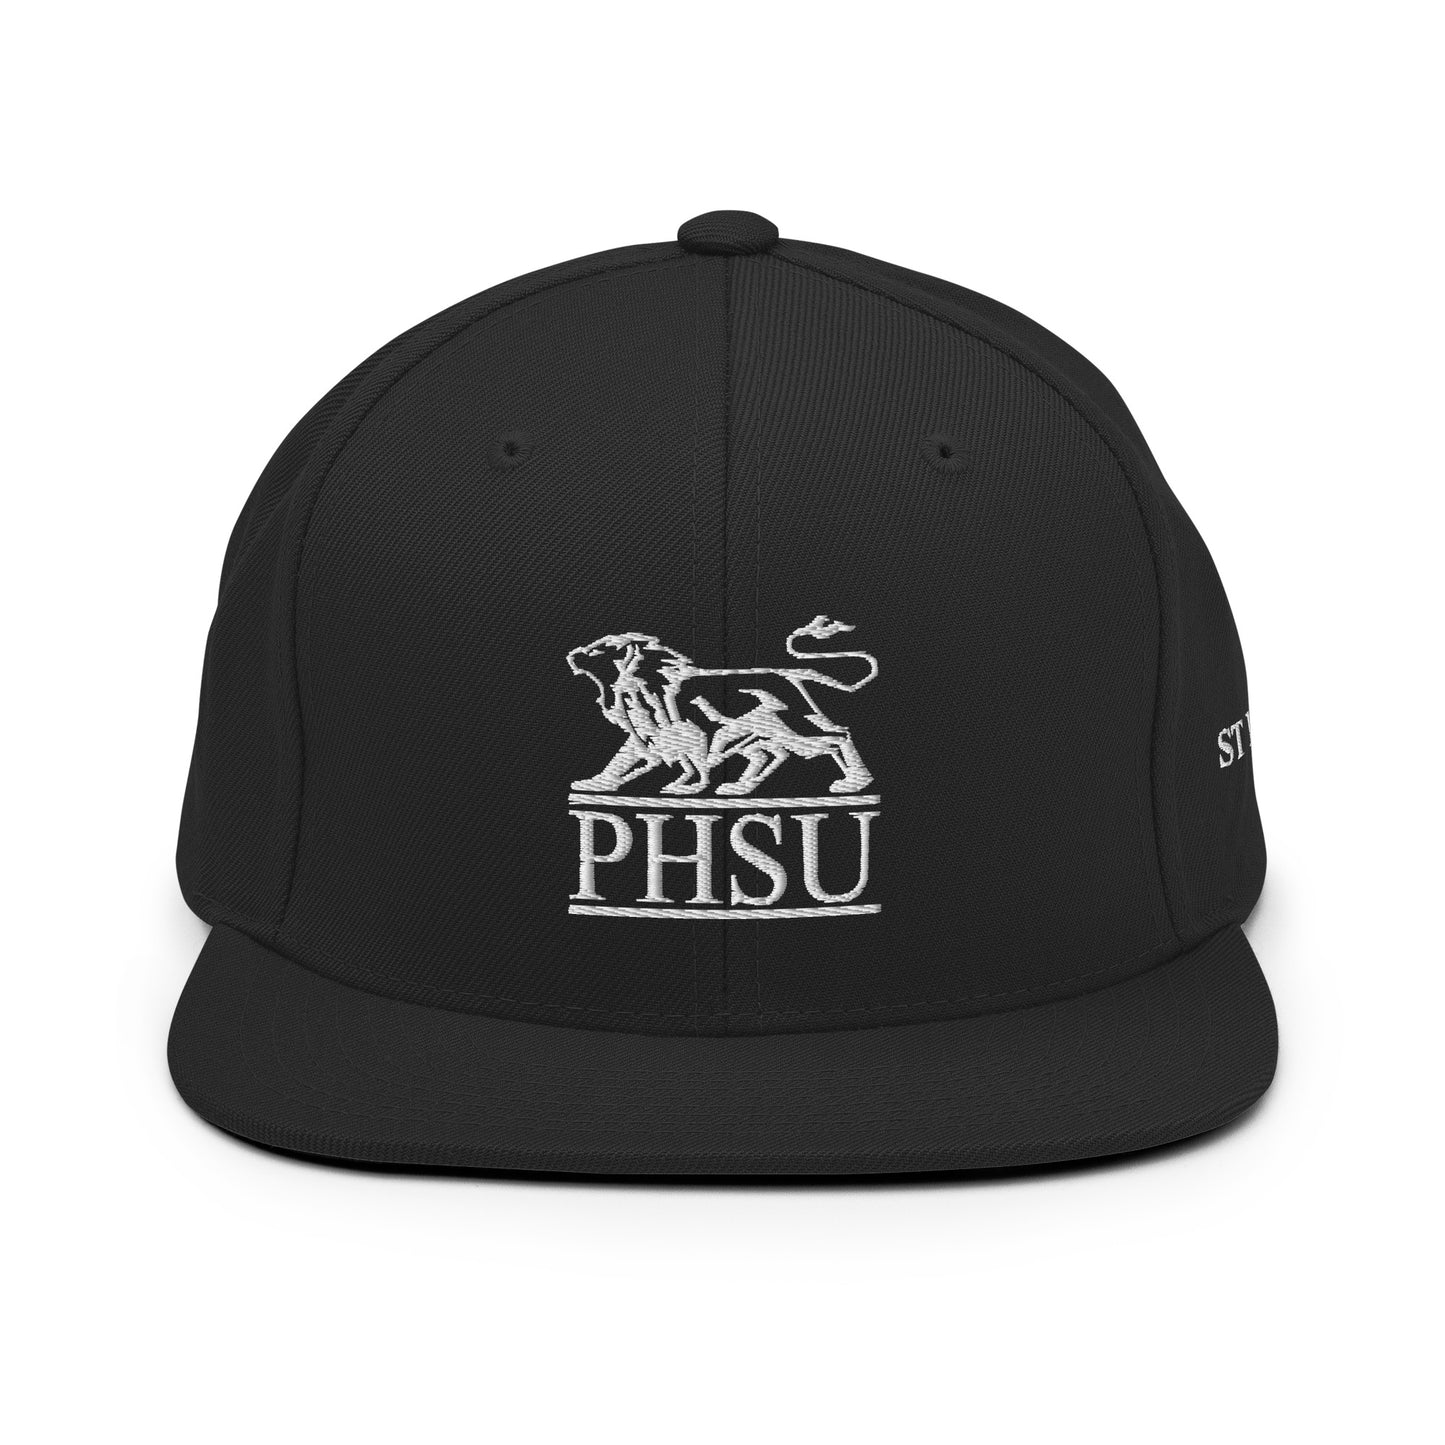 PHSU - St. Louis Campus - Snapback Hat